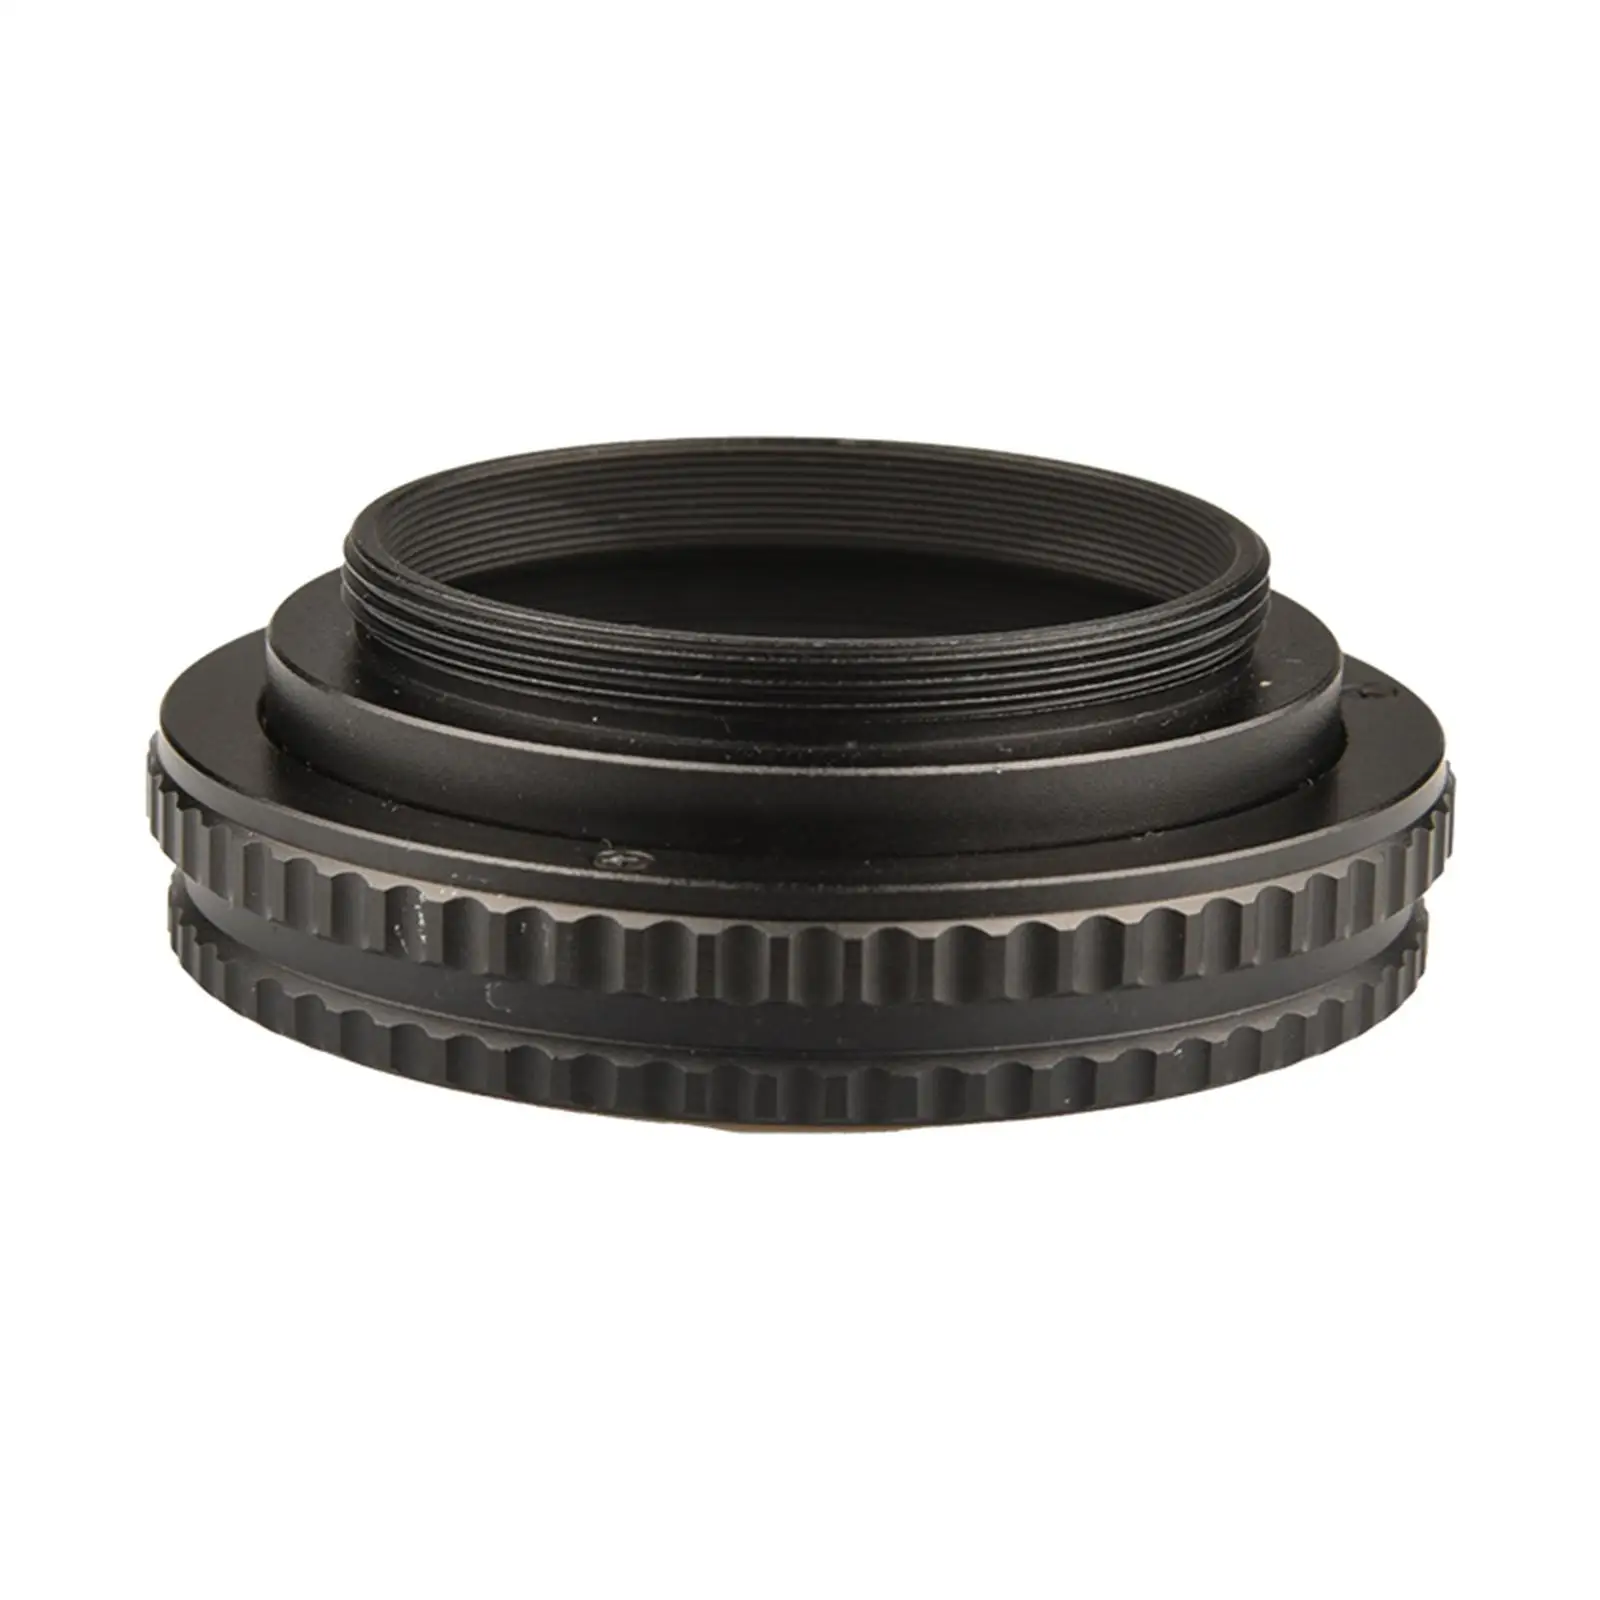 M42 2 Extension Tube Adapter Ring,  Installation Standard M42 Mount Adjustable Focusing Manually Focus for DSLR Film